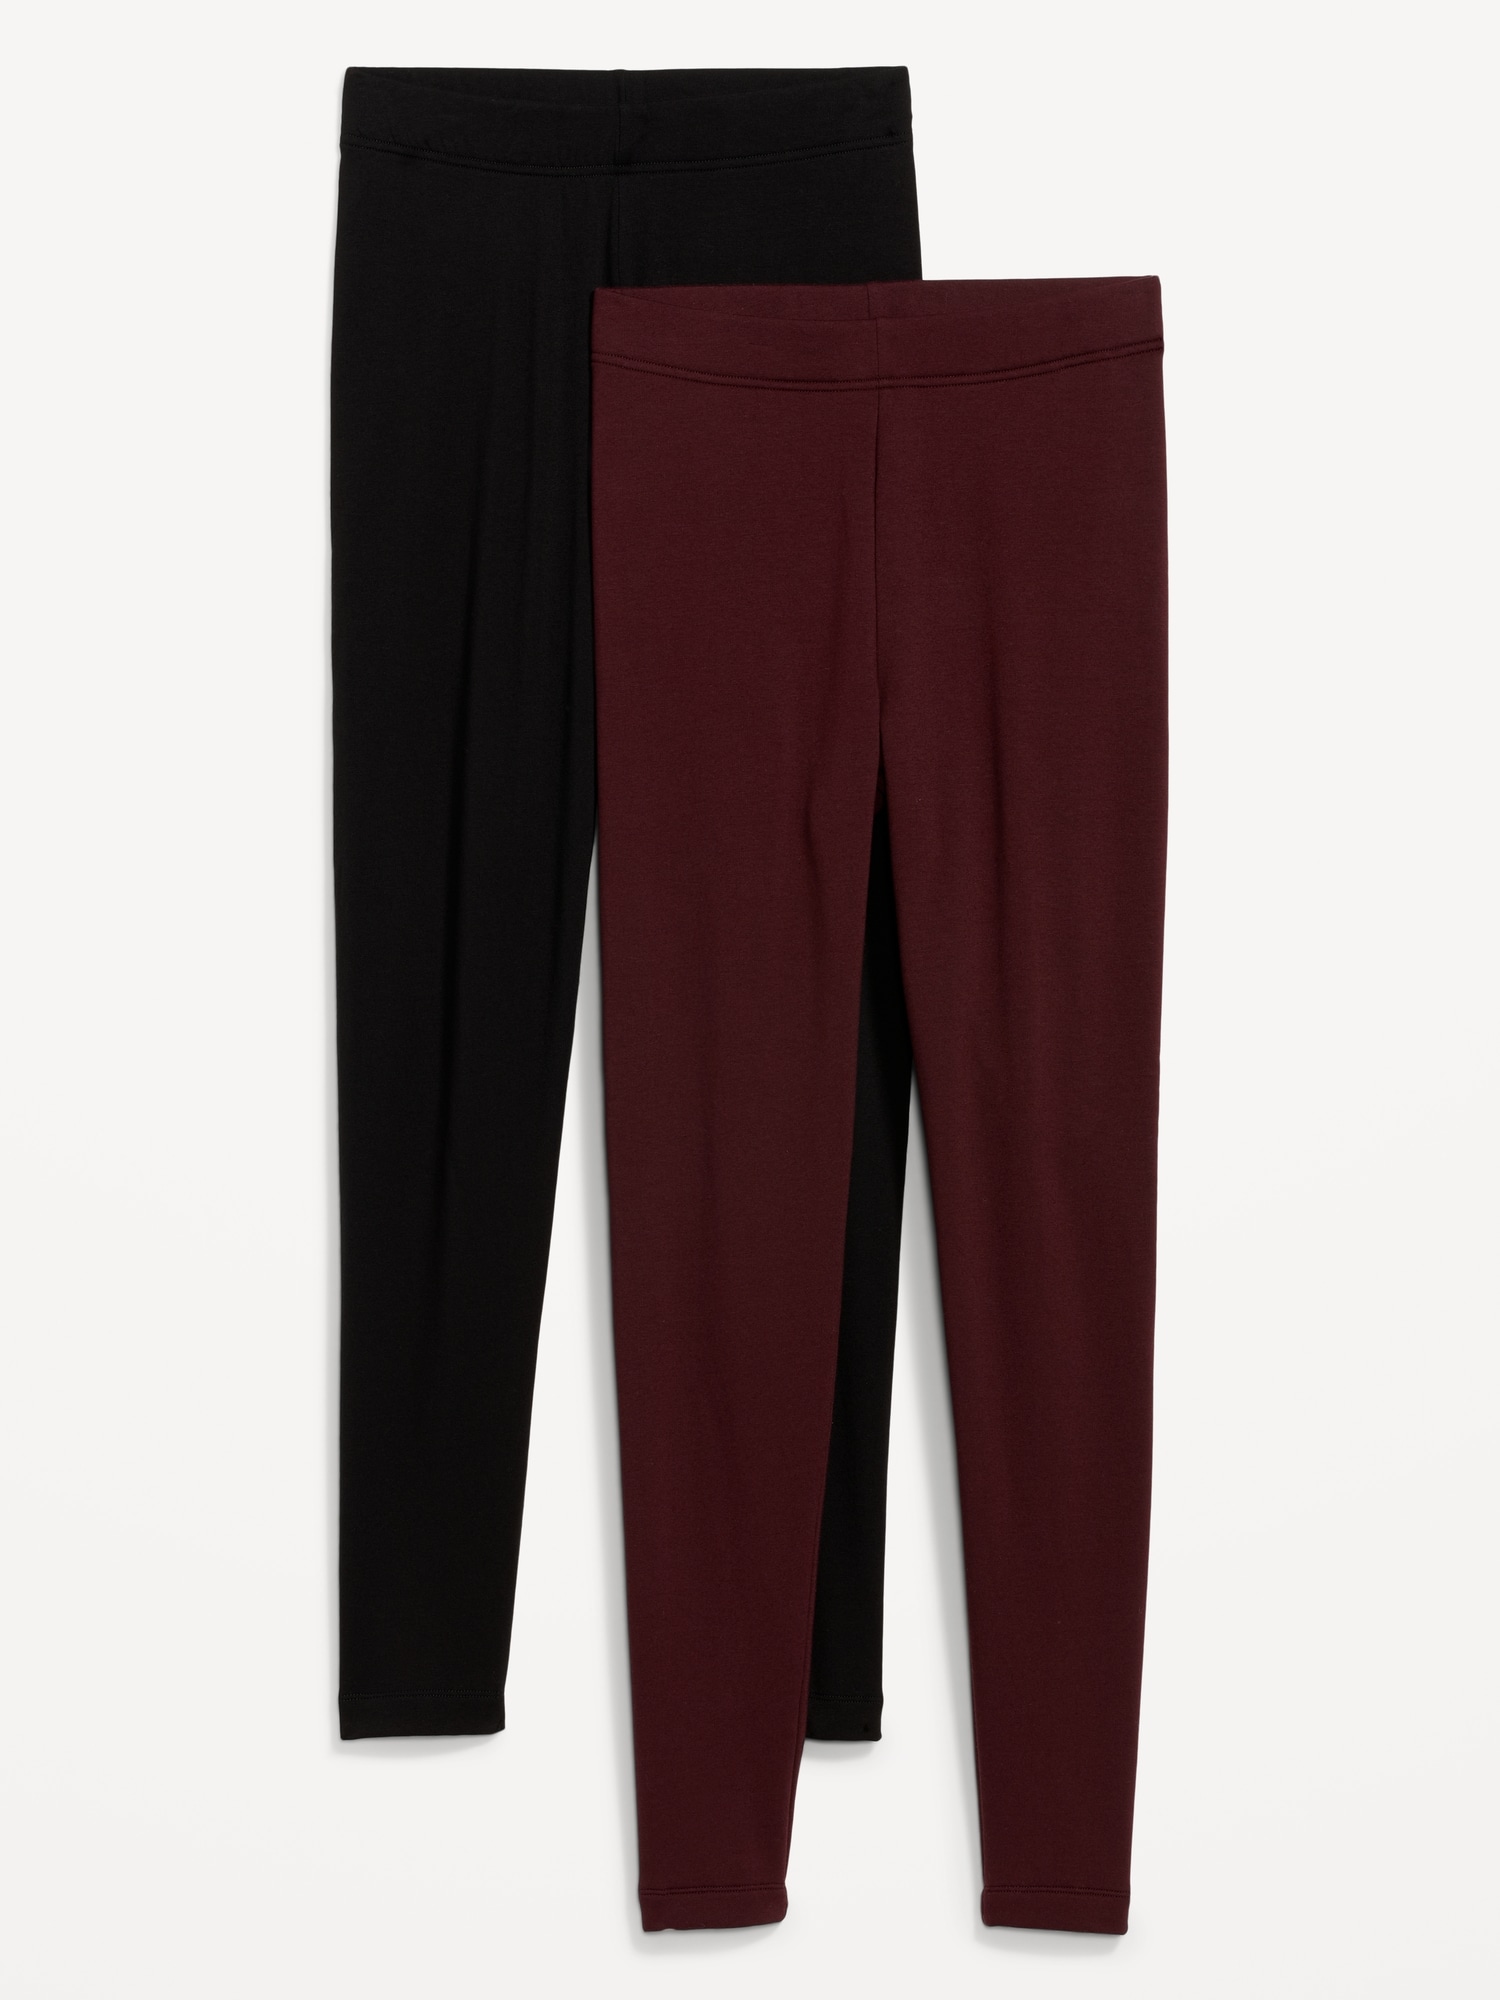 LYLA High Waist Yoga Pants - Dark Red | Visual Mood